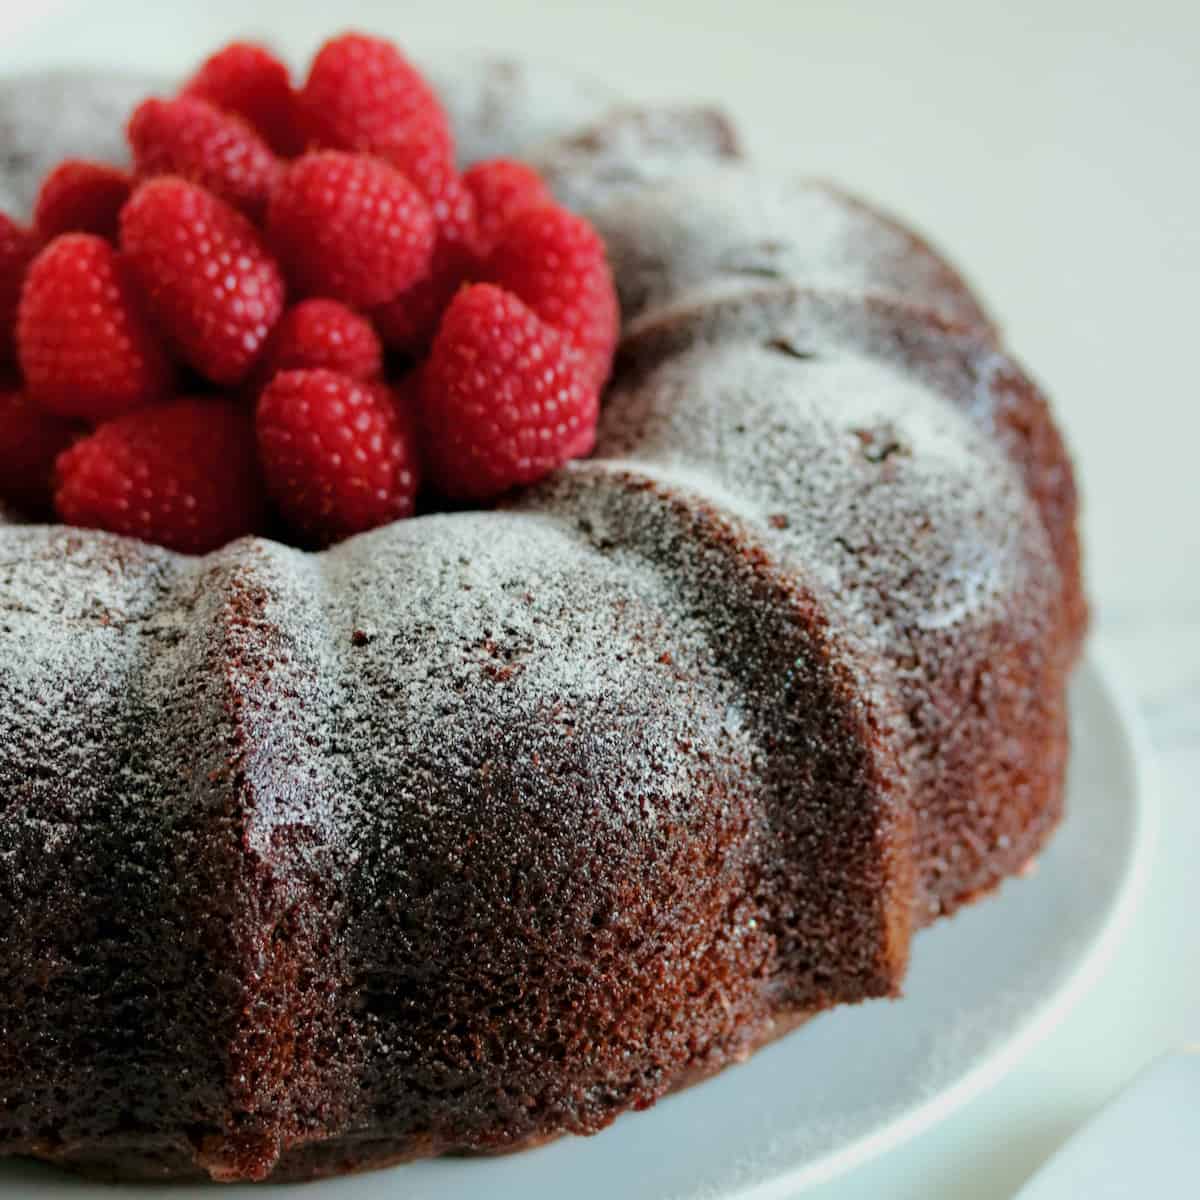 Chocolate bundt cake with raspberries.